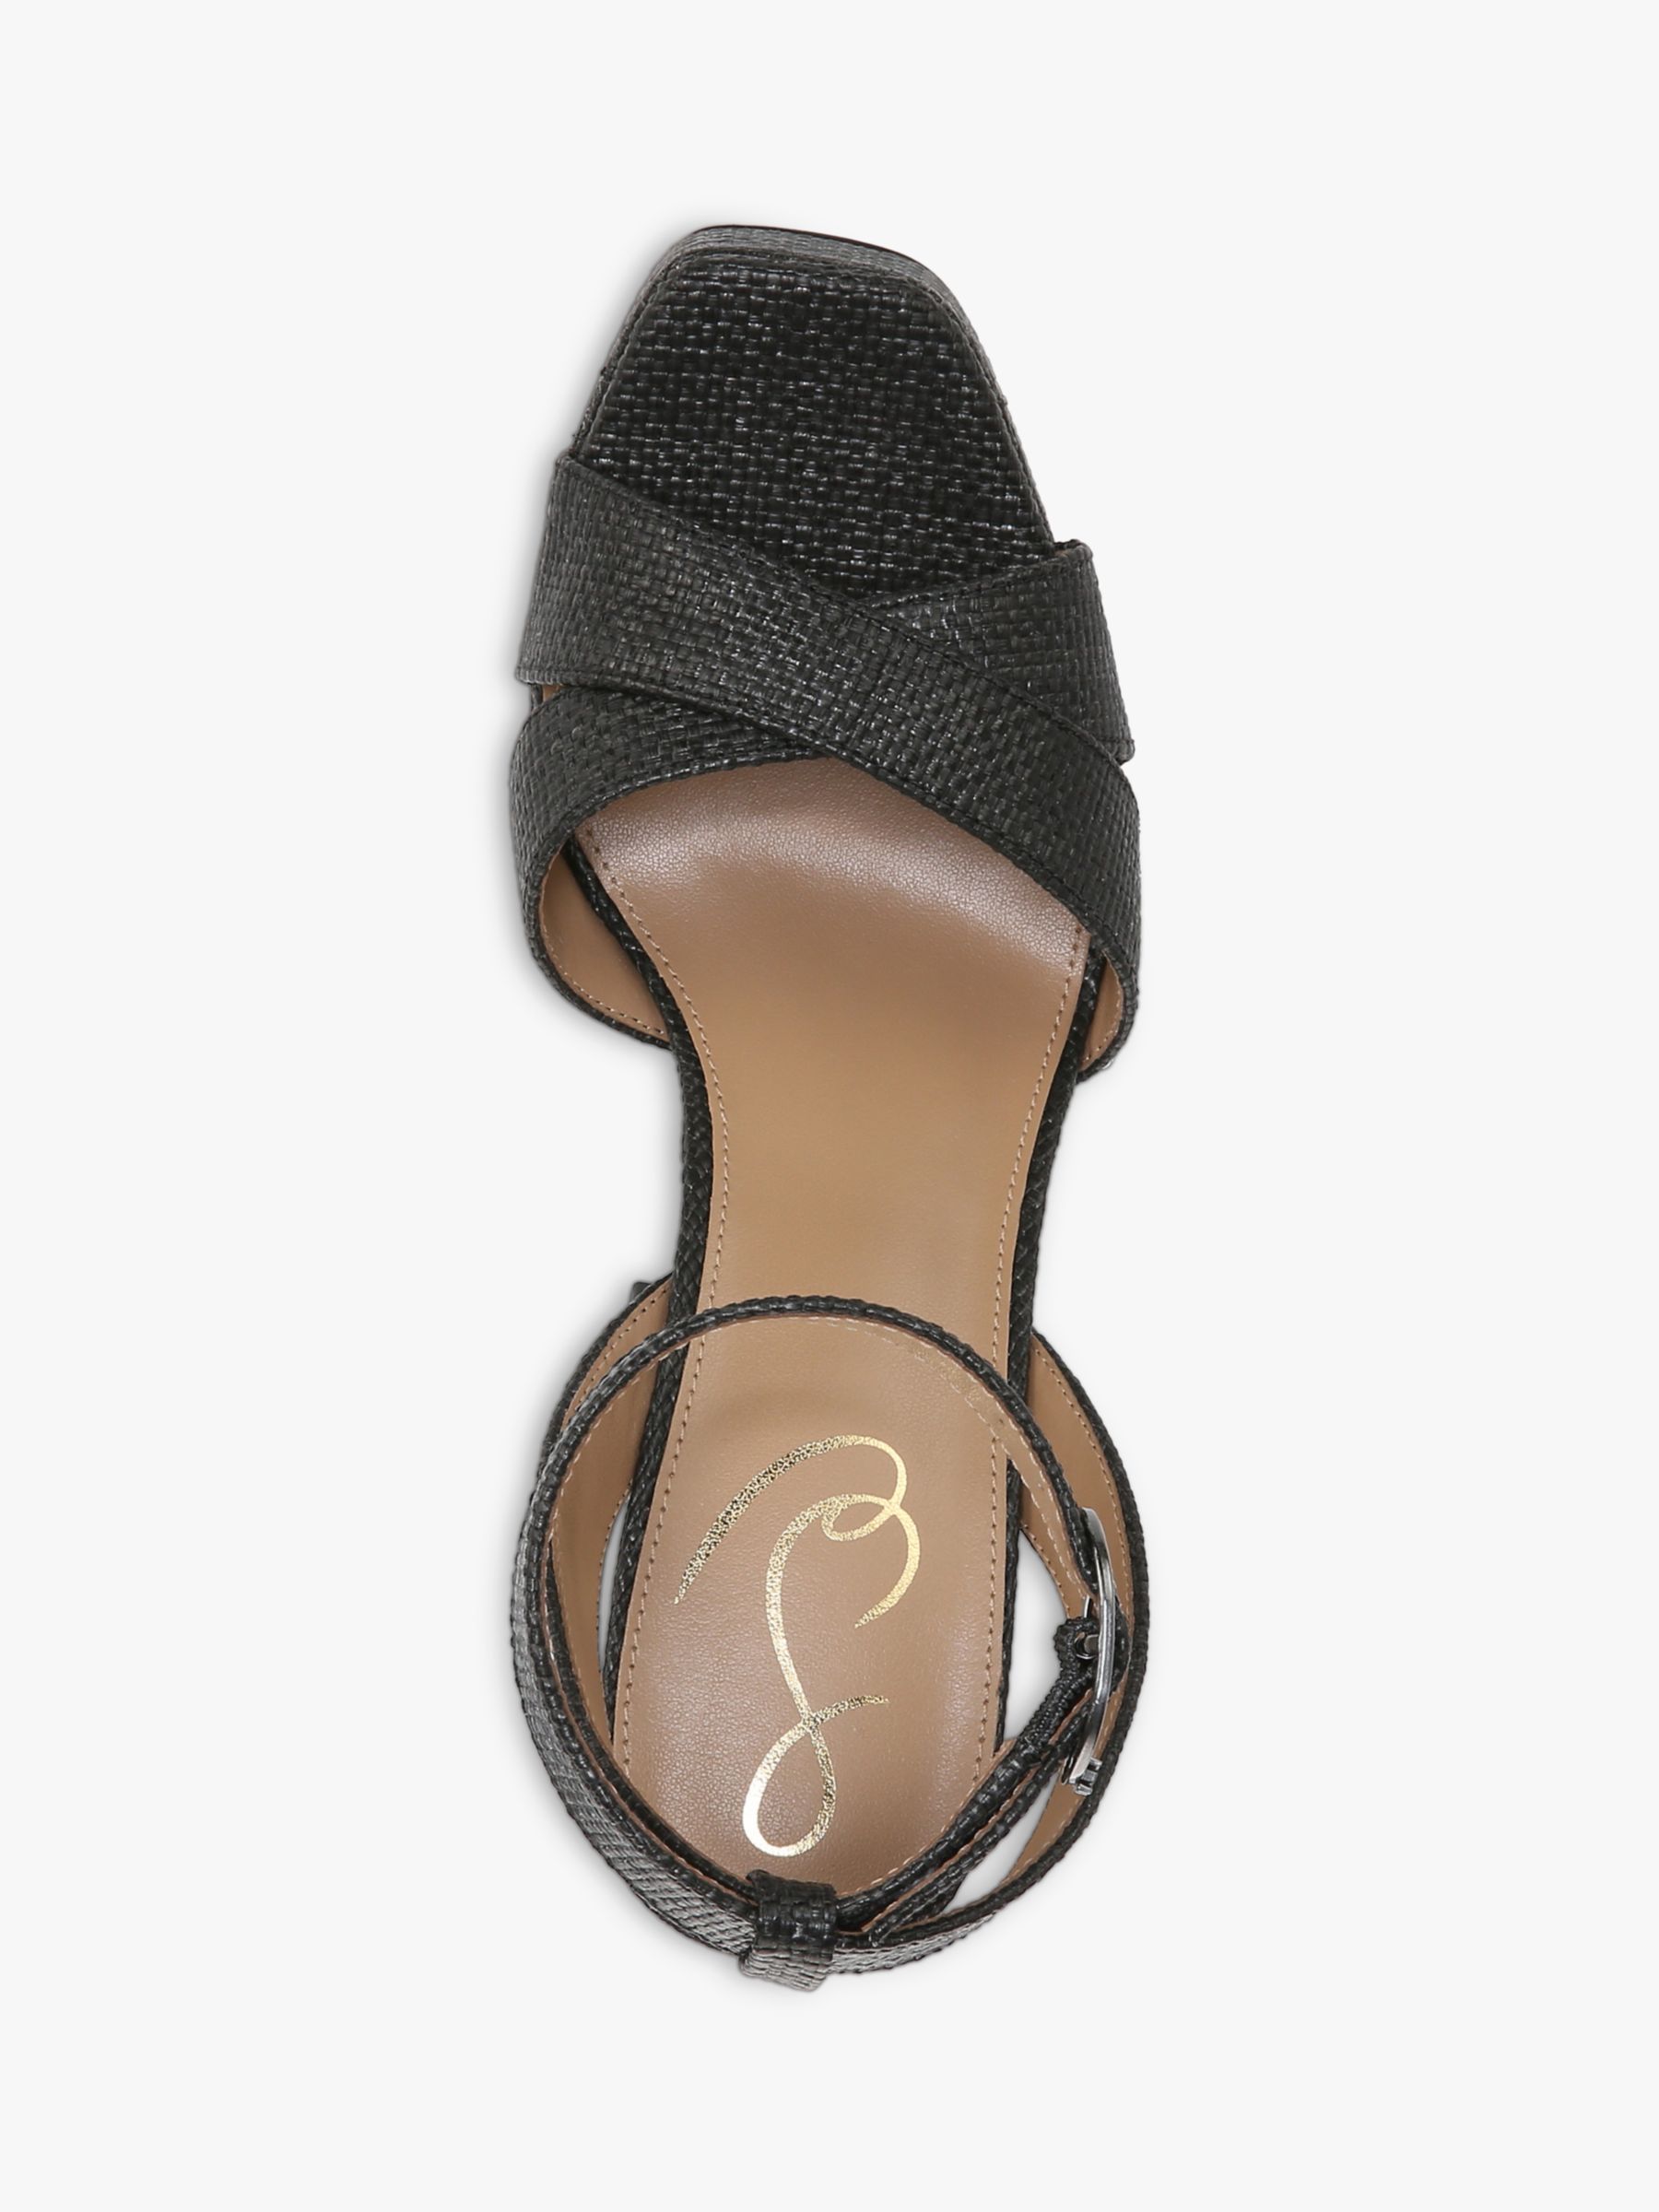 Sam Edelman Kayna Woven Platform Sandals, Black